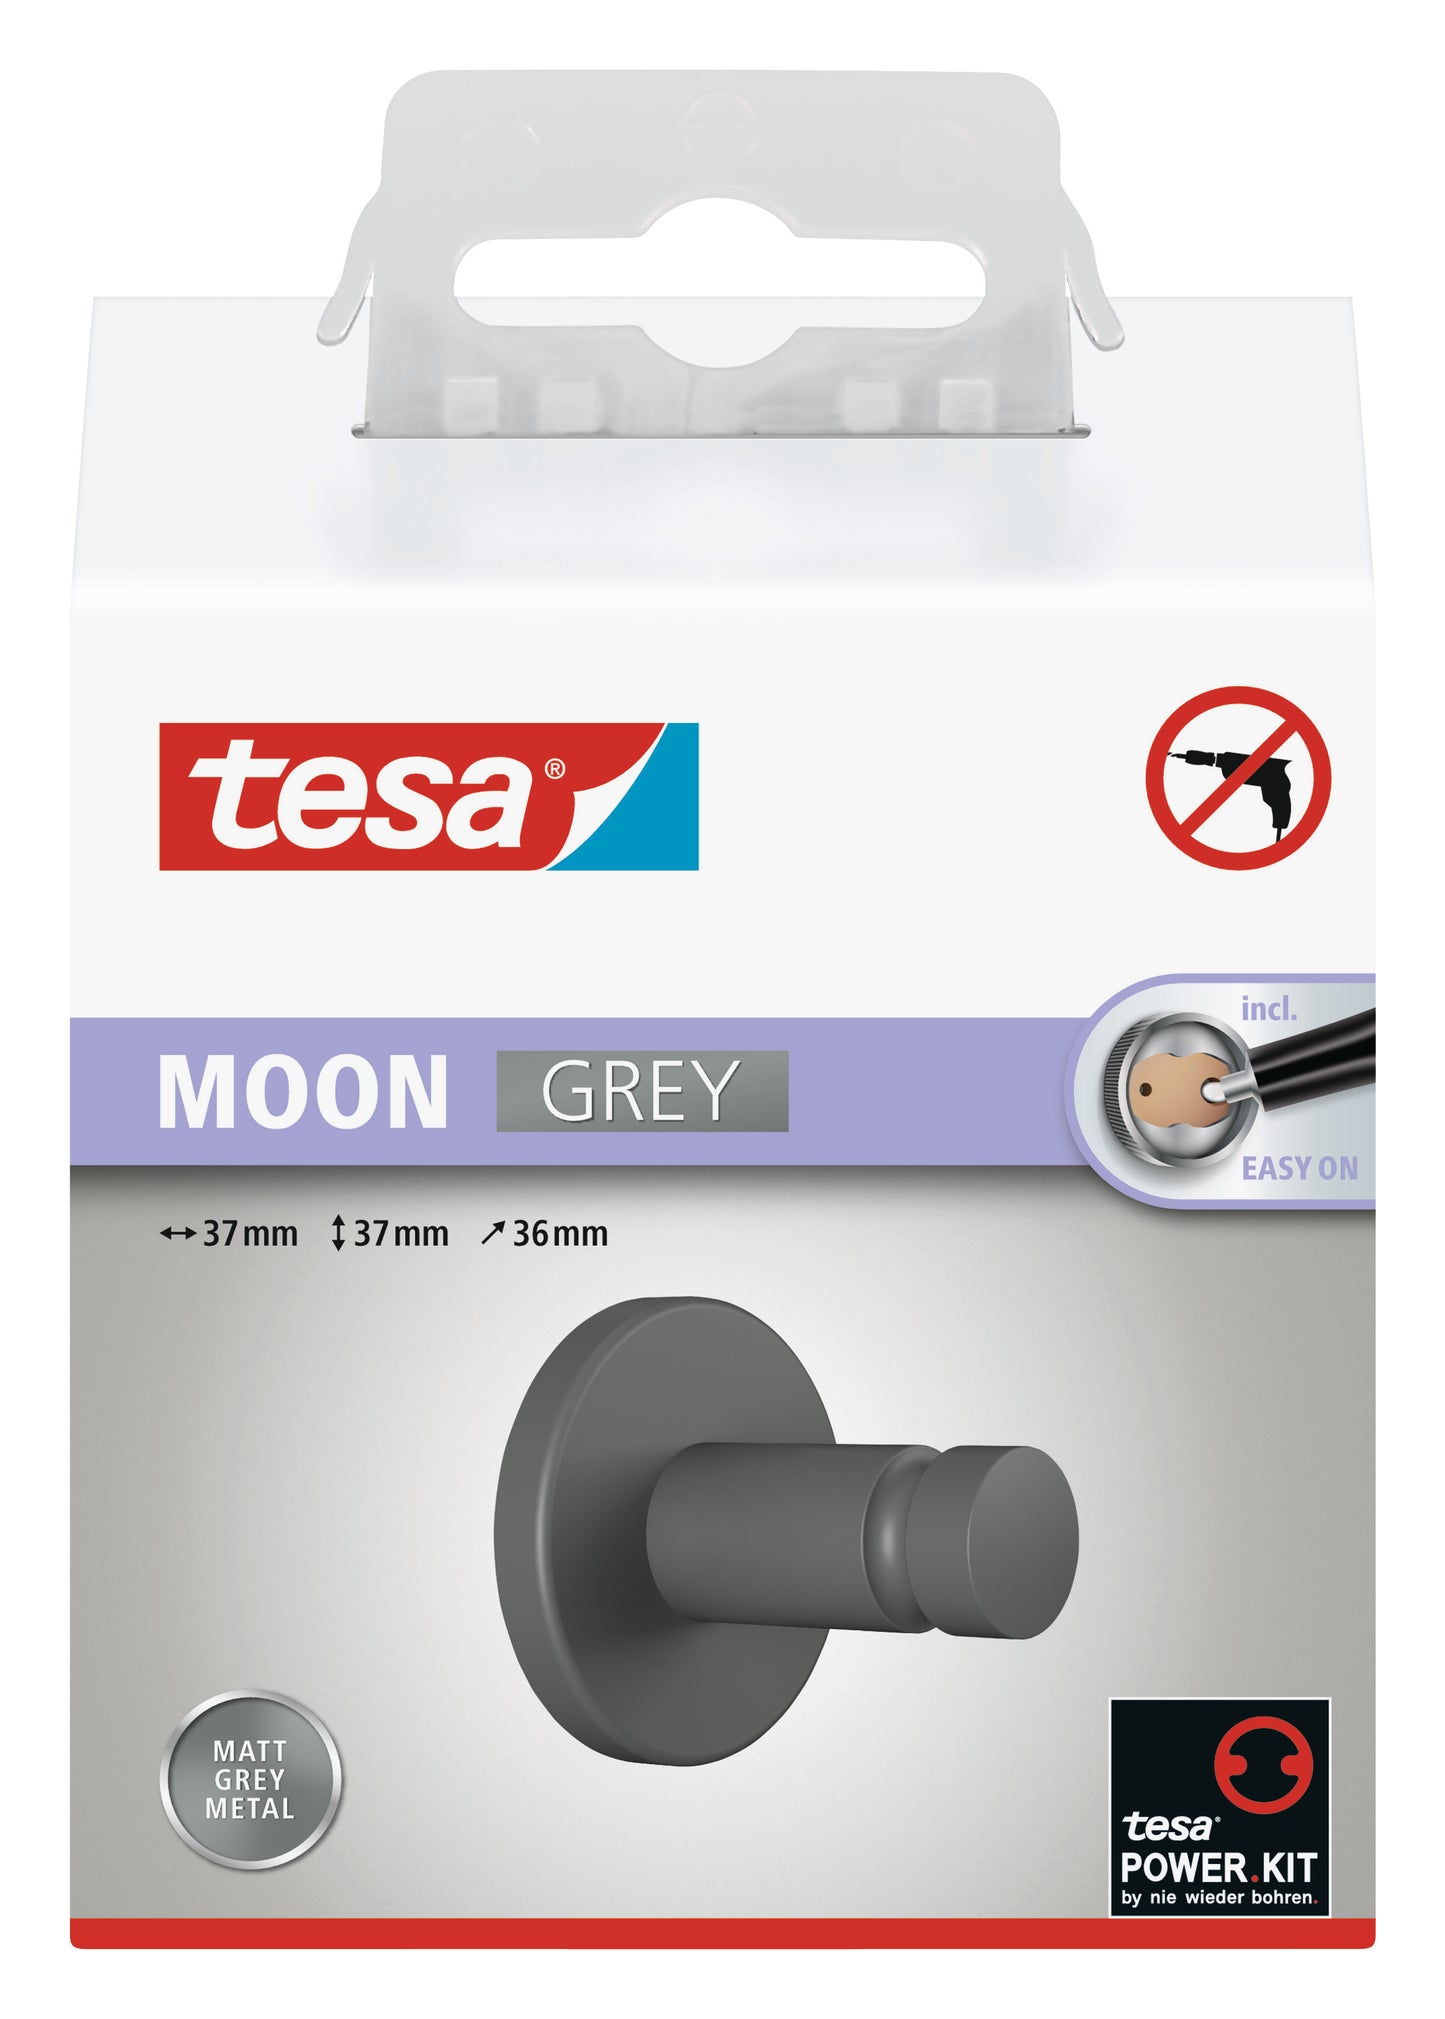 tesa® Moon Handtuchhaken zum Kleben, 6 Varianten , garantiert rostfrei